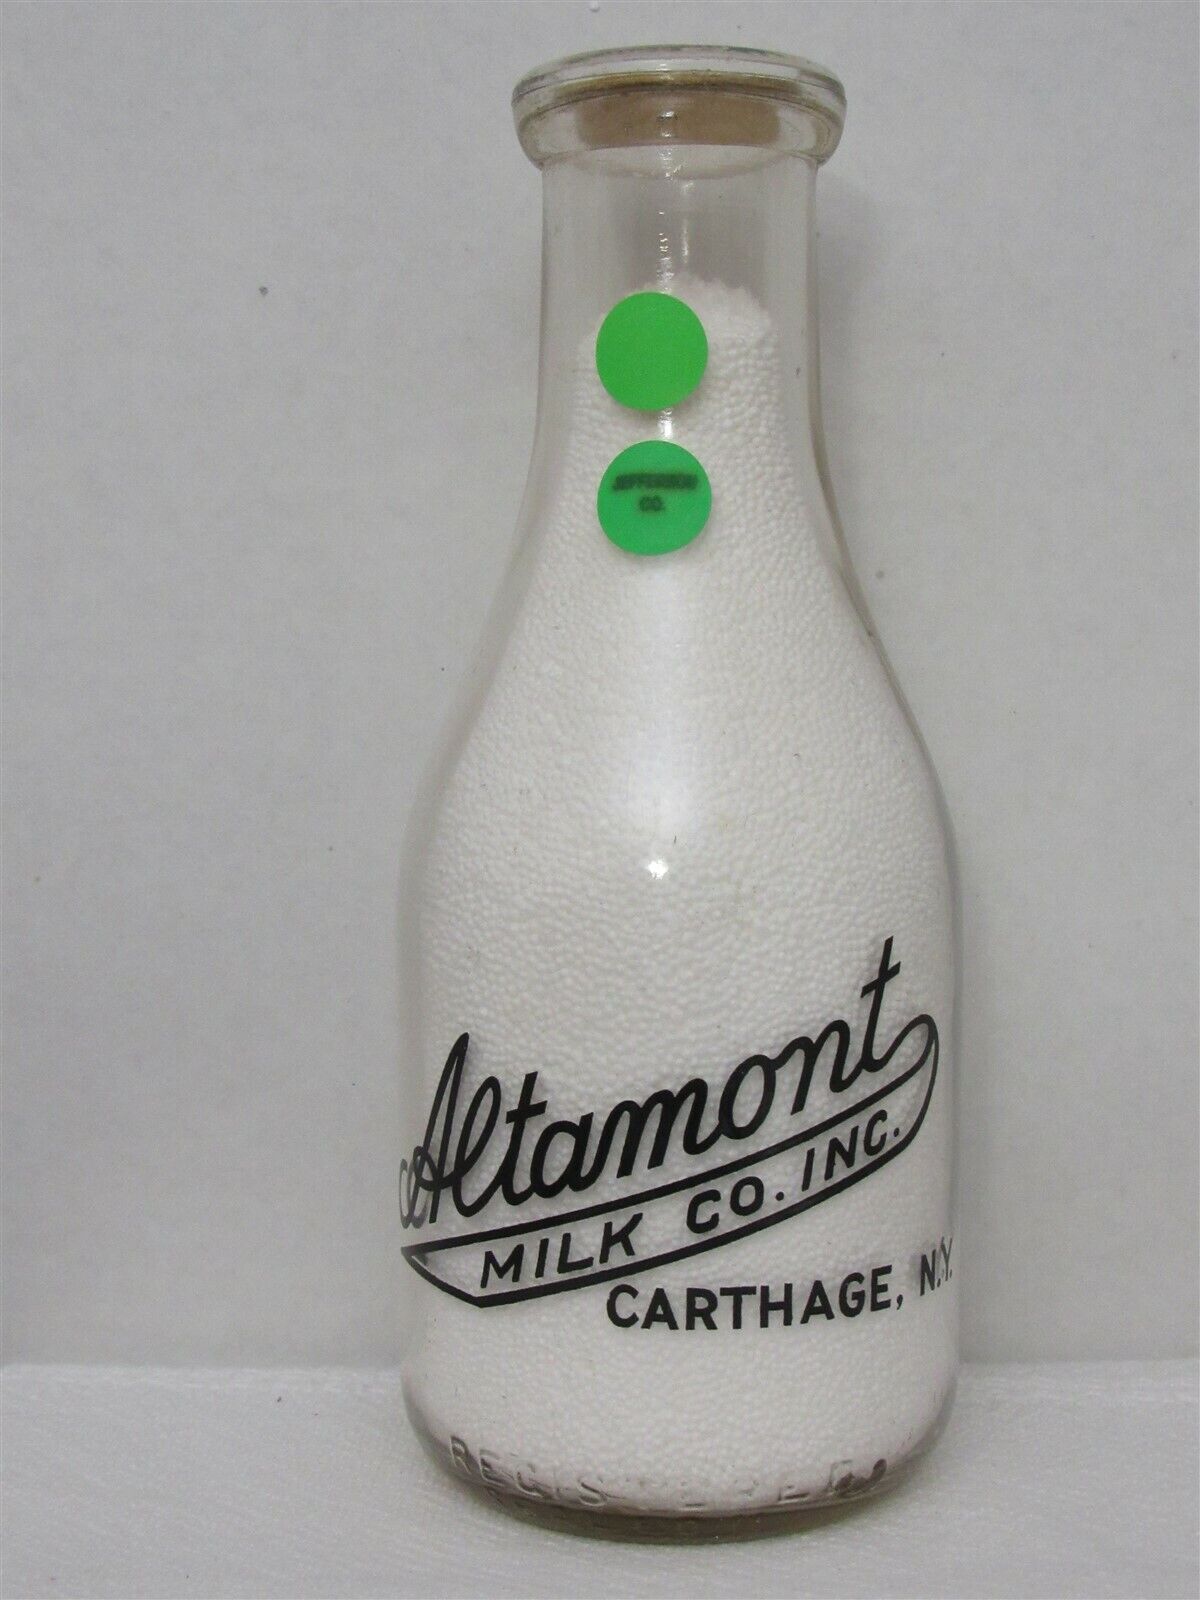 TRPQ Milk Bottle Altamont Milk Co Inc Dairy Carthage NY 1943 MILKMAN Black Var#1